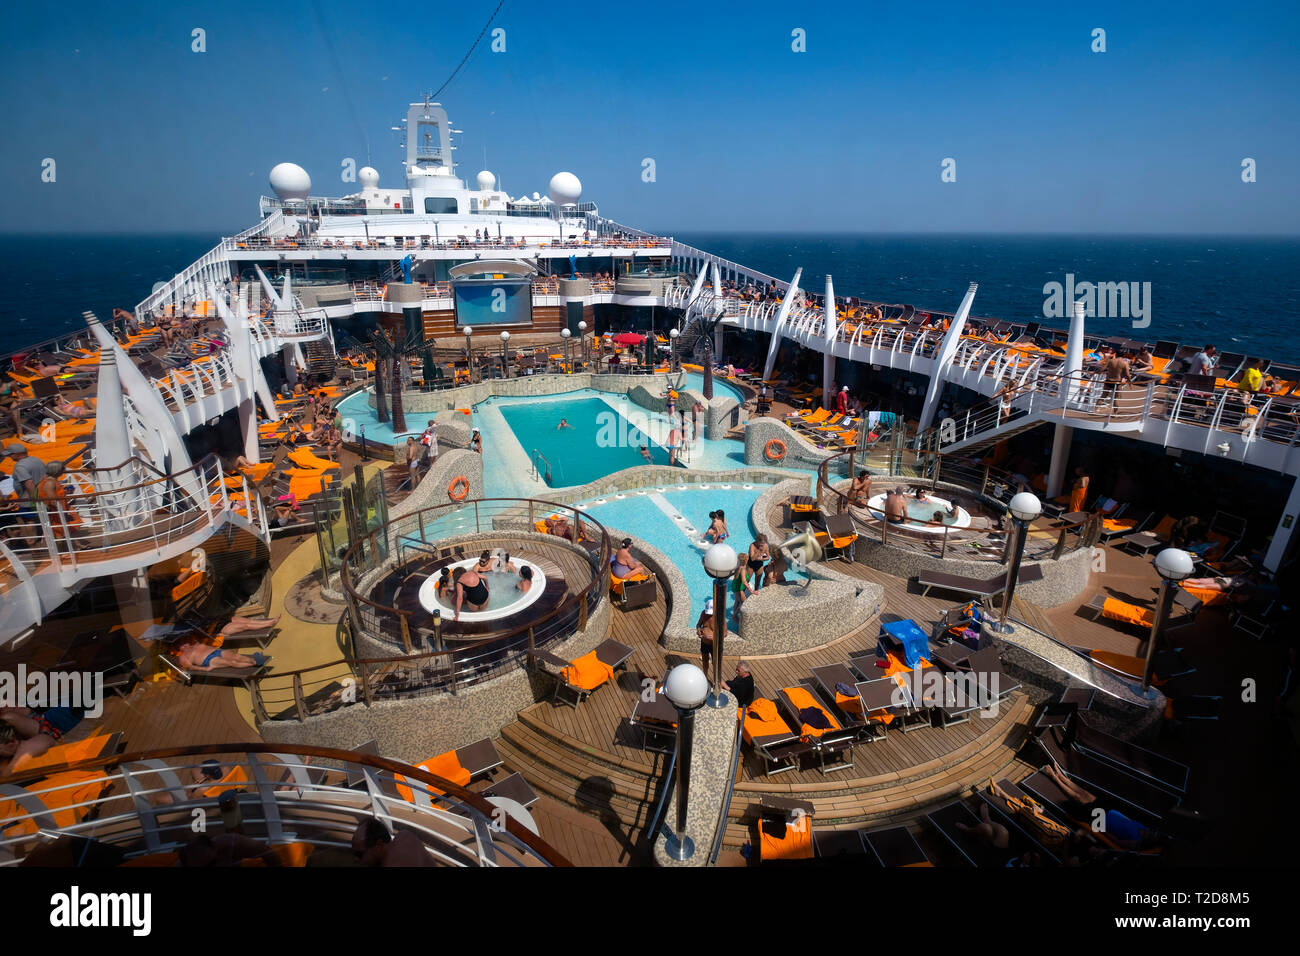 People enjoying the swimming pool on the cruise ship MSC Splendida Stock Photo